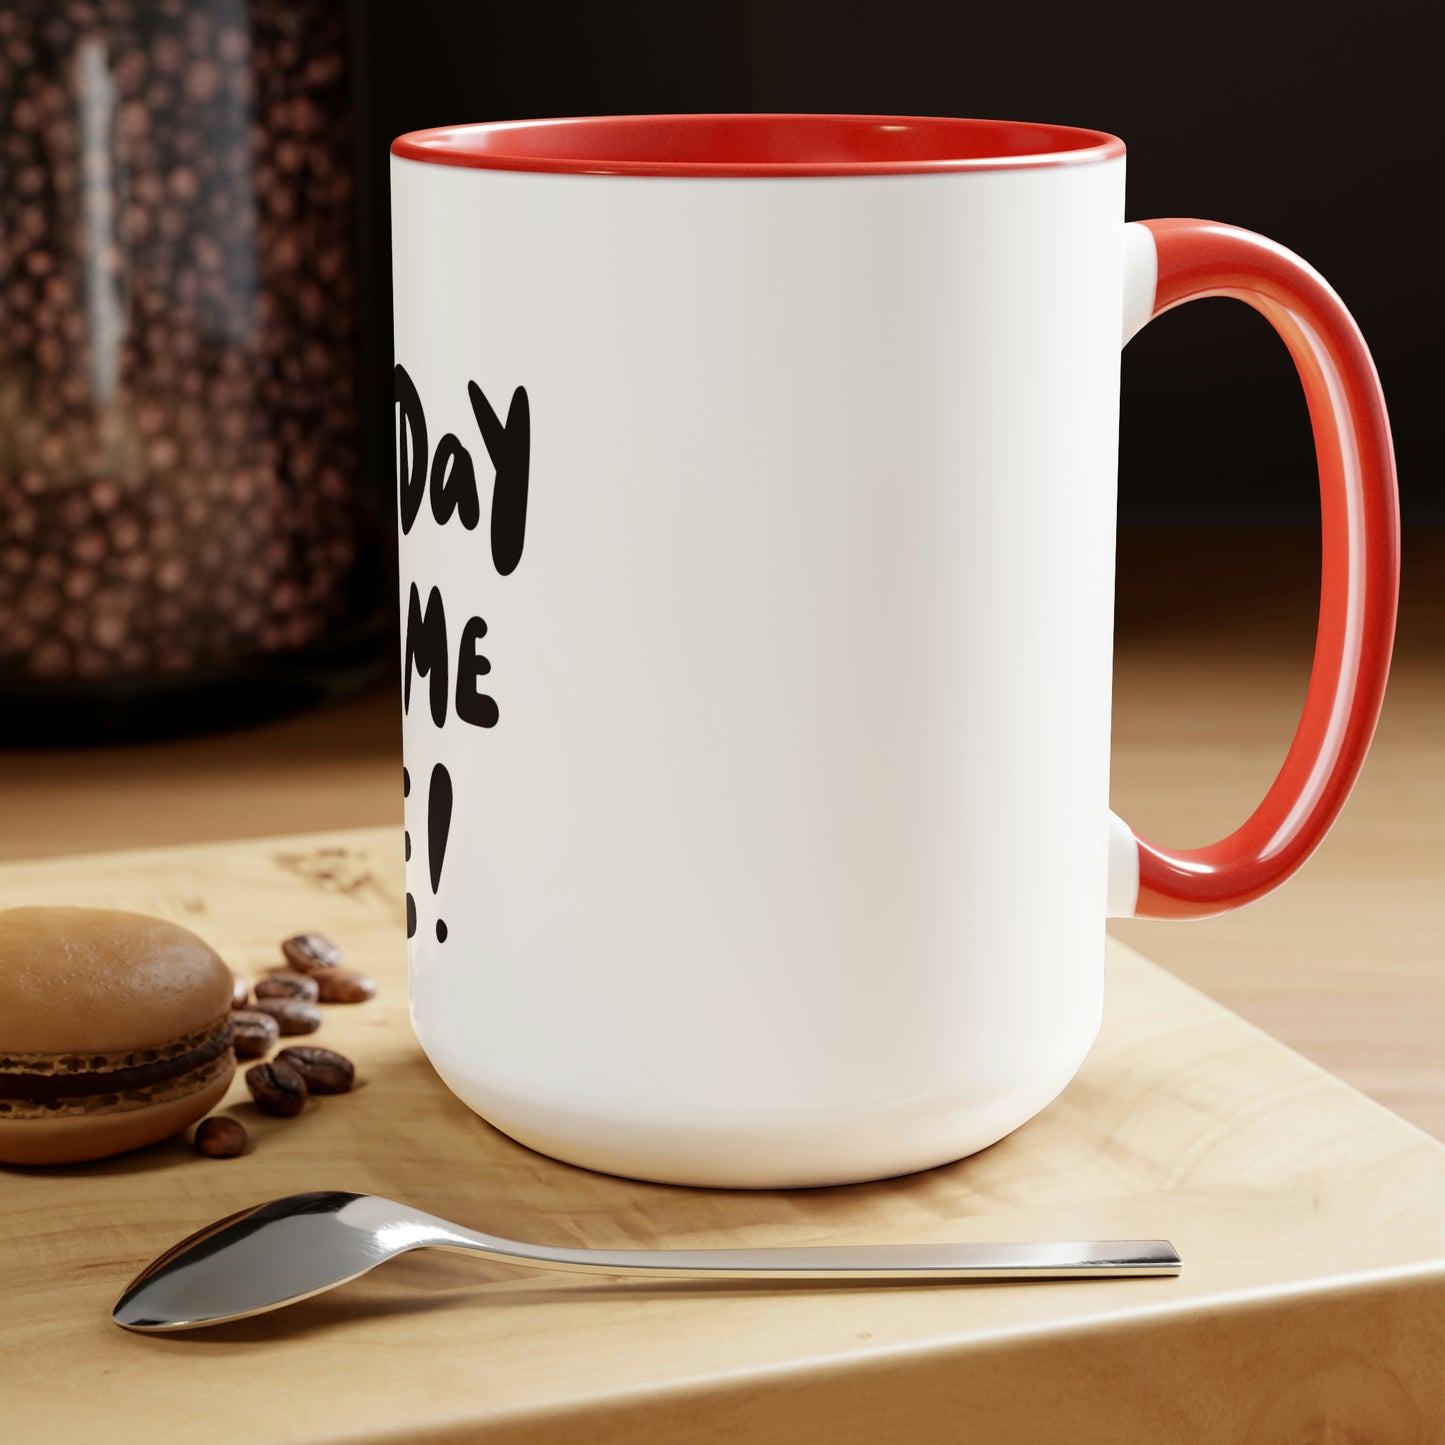 Leave me alone -Two-Tone Coffee Mugs, 15oz